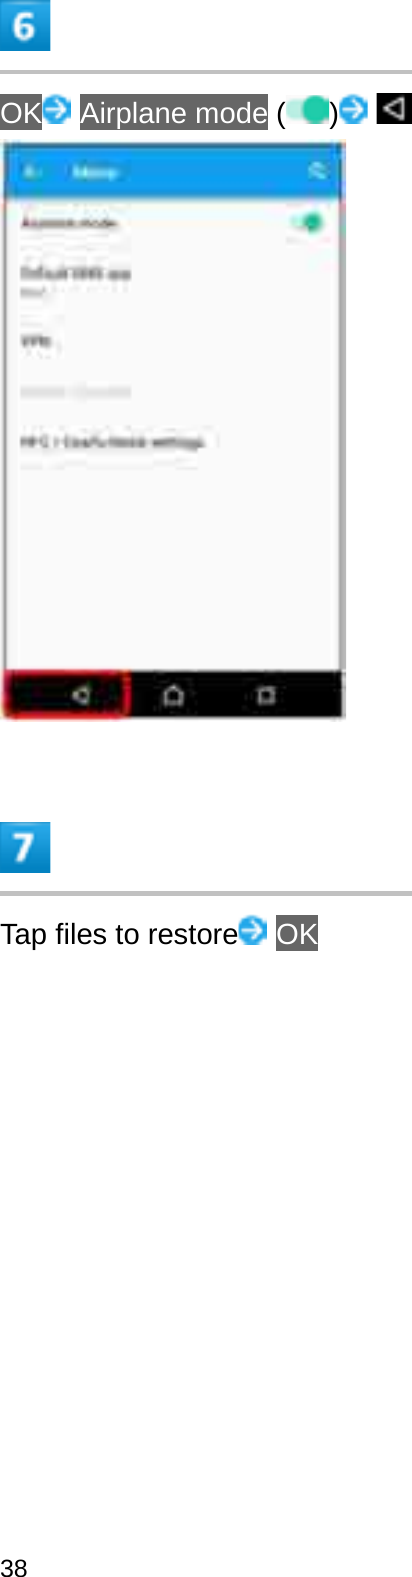 OK Airplane mode ( )Tap files to restore OK38